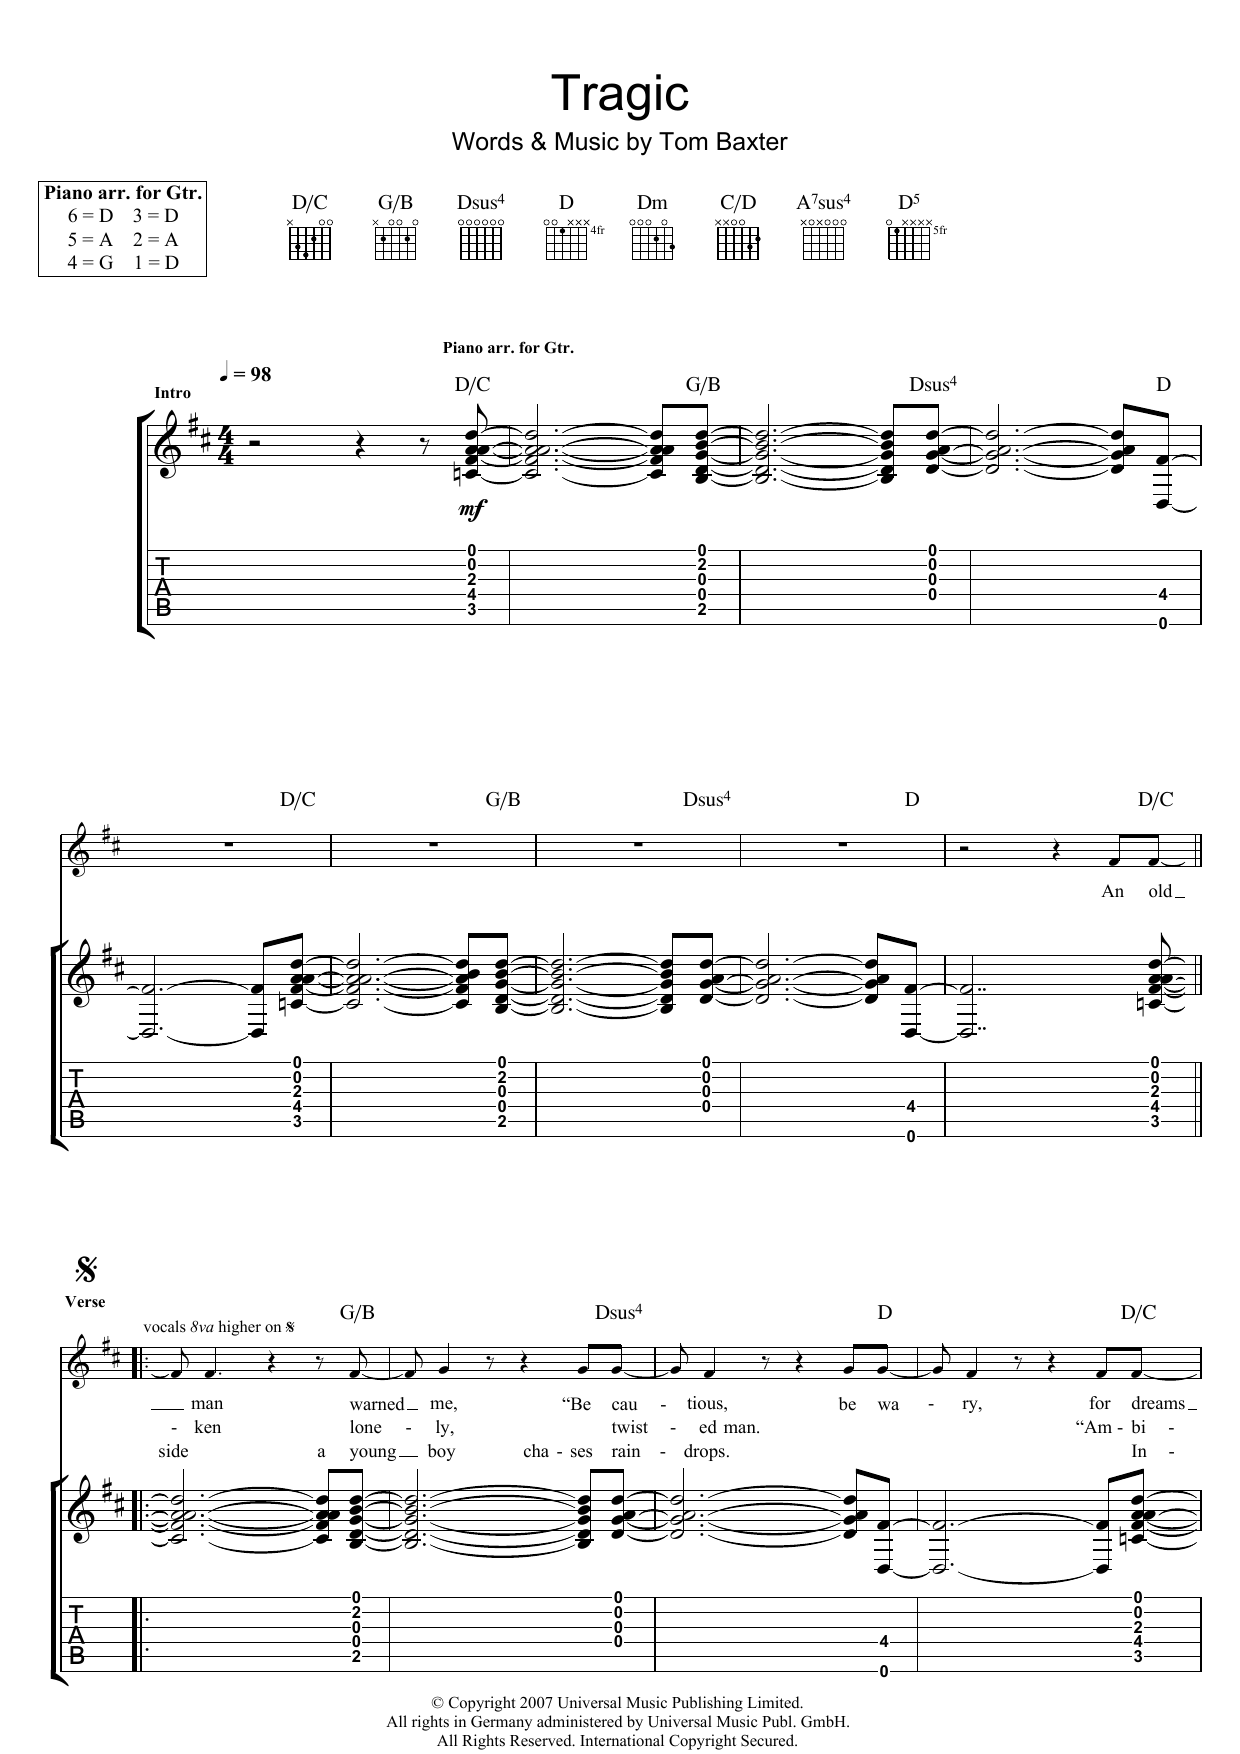 Tom Baxter Tragic Sheet Music Notes & Chords for Guitar Tab - Download or Print PDF